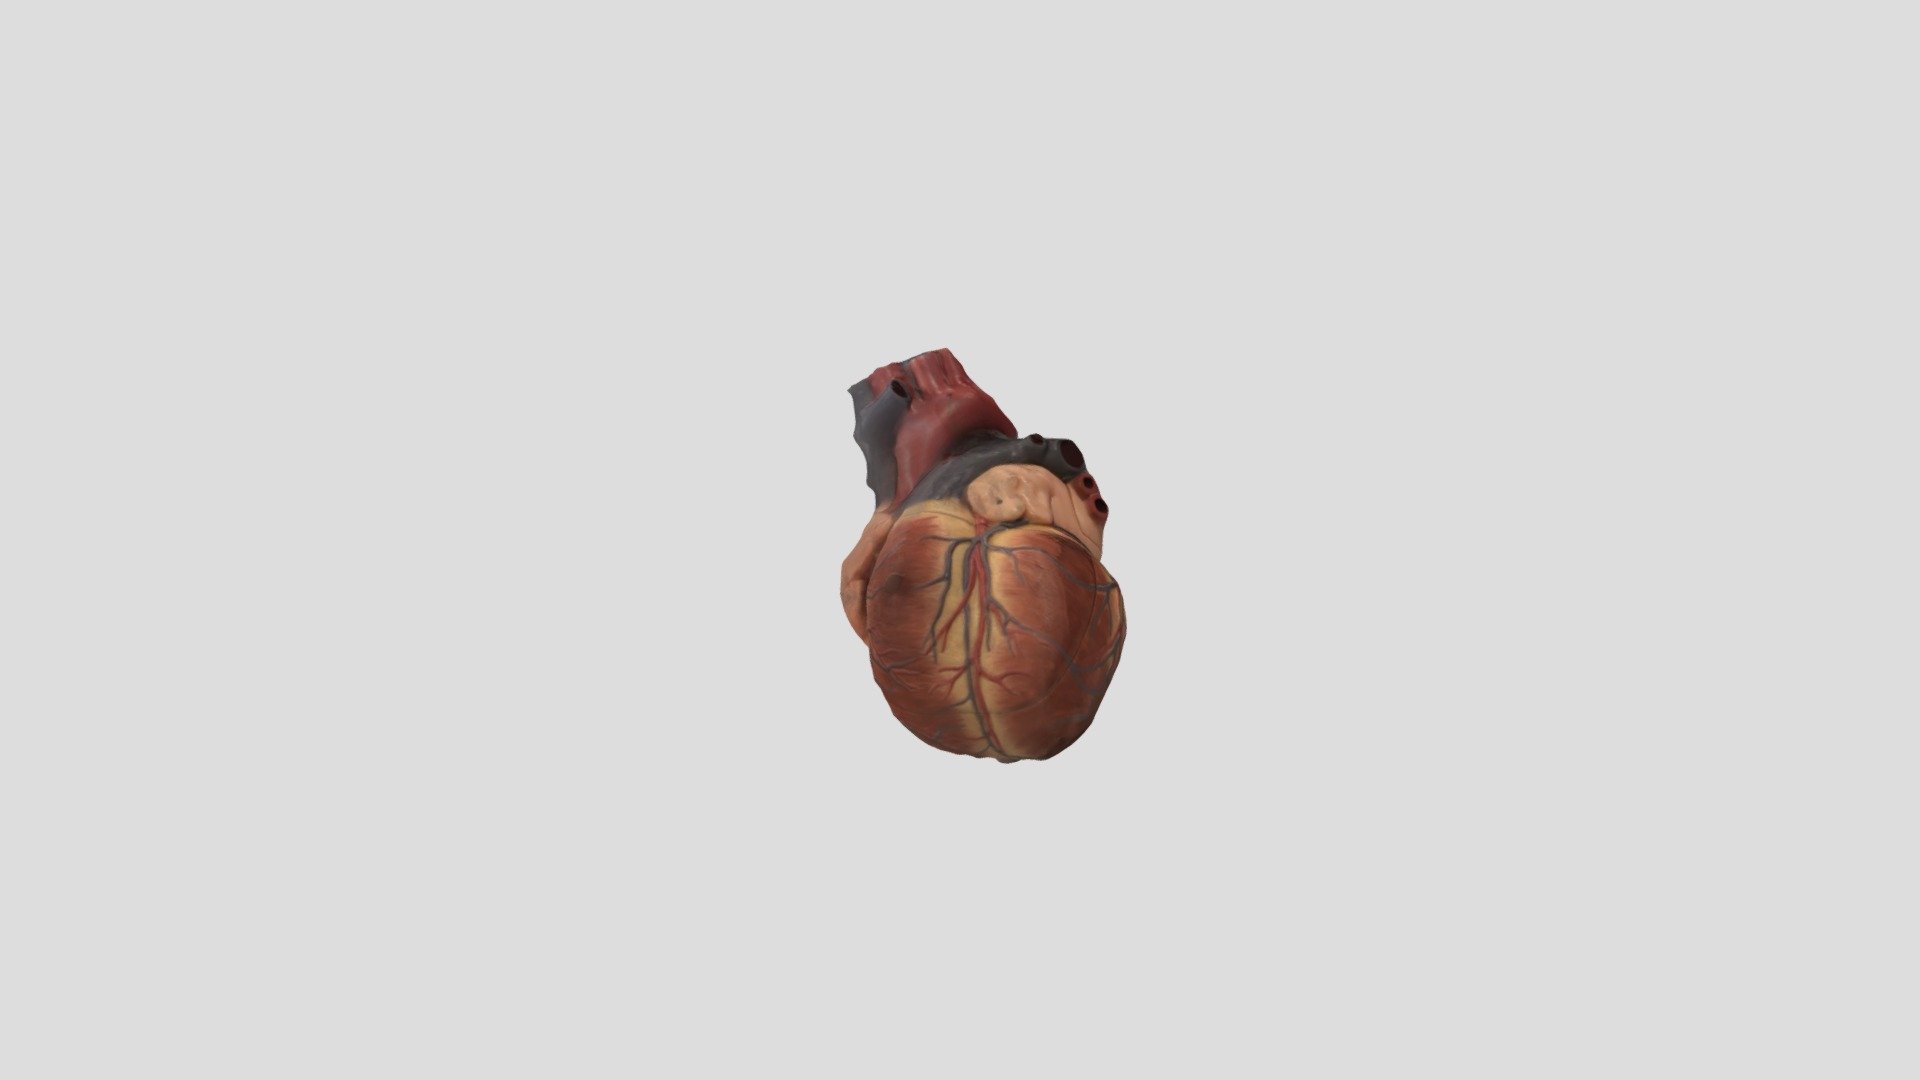 Heart arteries and veins